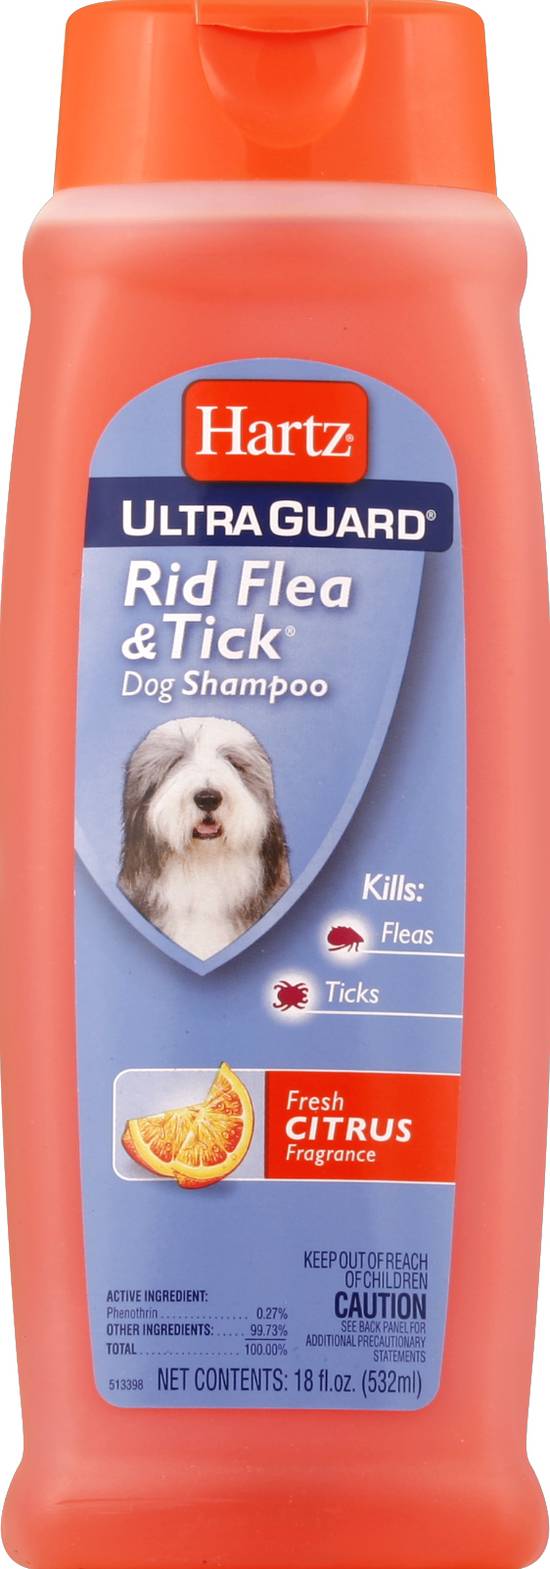 Hartz Ultra Guard Rid Flea & Tick Dog Shampoo